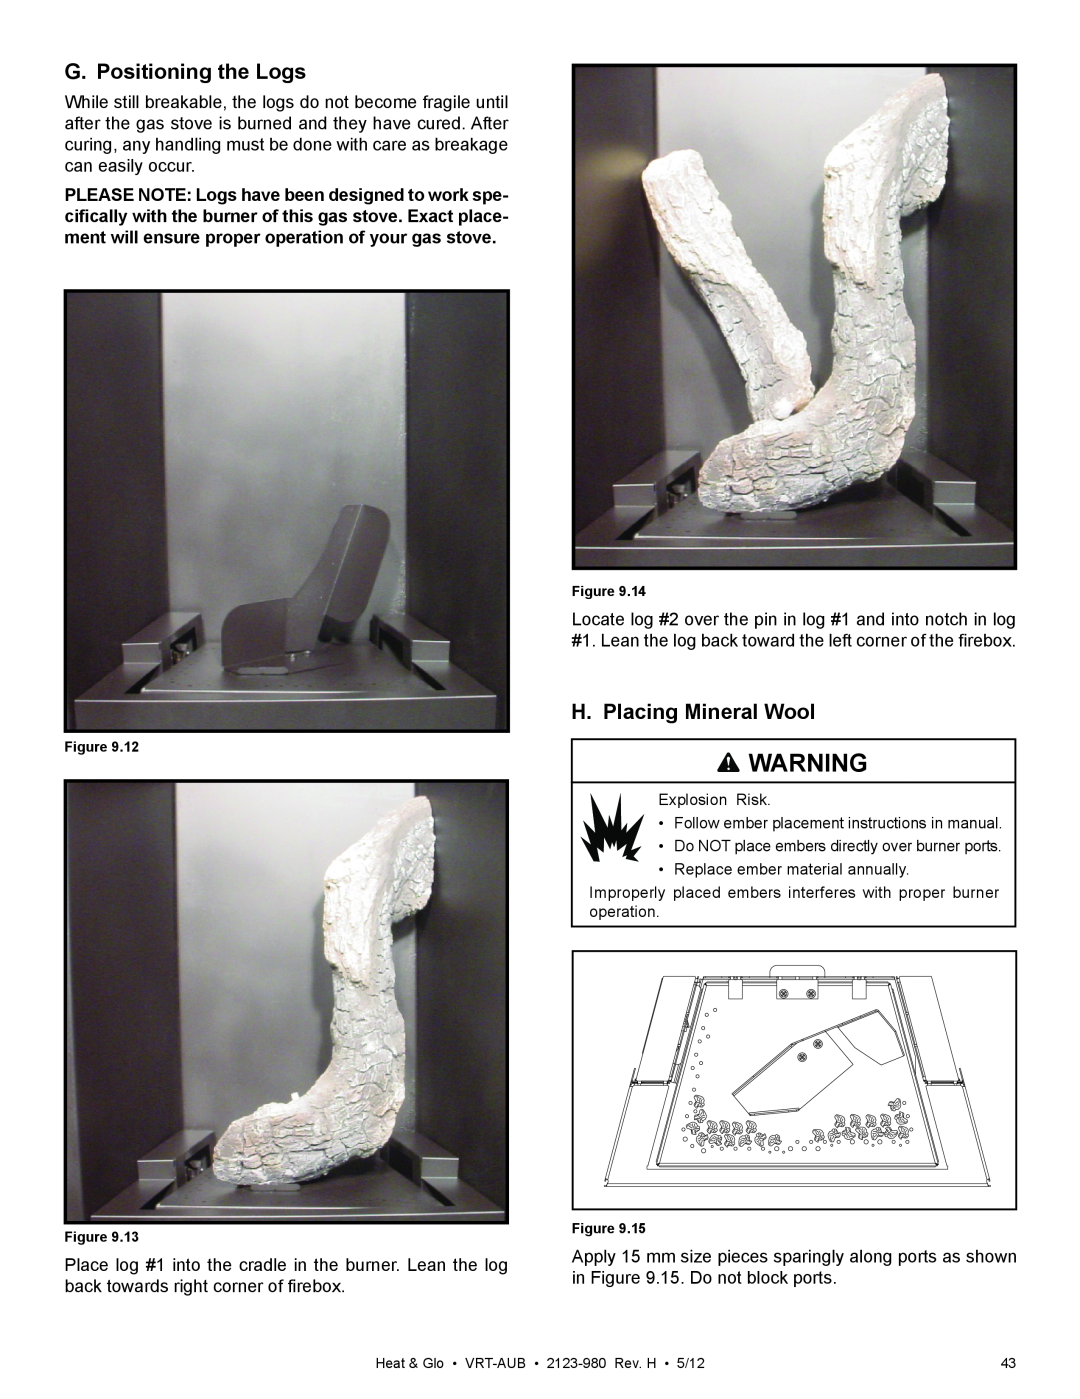 Heat & Glo LifeStyle VRT-BZ-N-AUB, VRT-GY-N-AUB G. Positioning the Logs, H. Placing Mineral Wool, Explosion Risk 